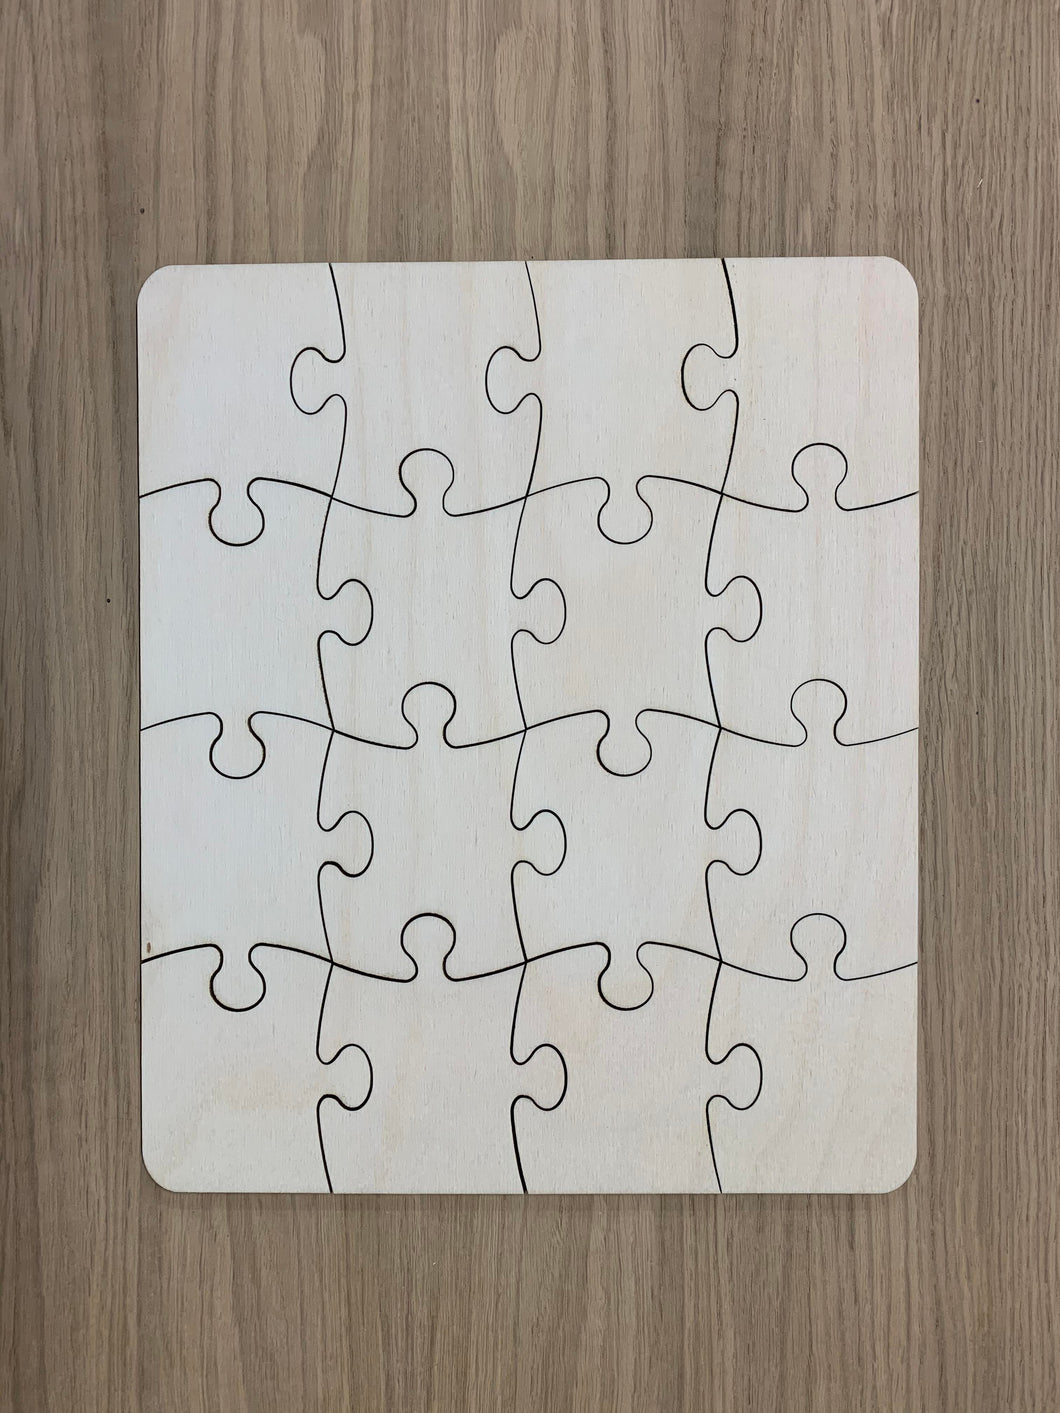 Blank Jigsaw Puzzles